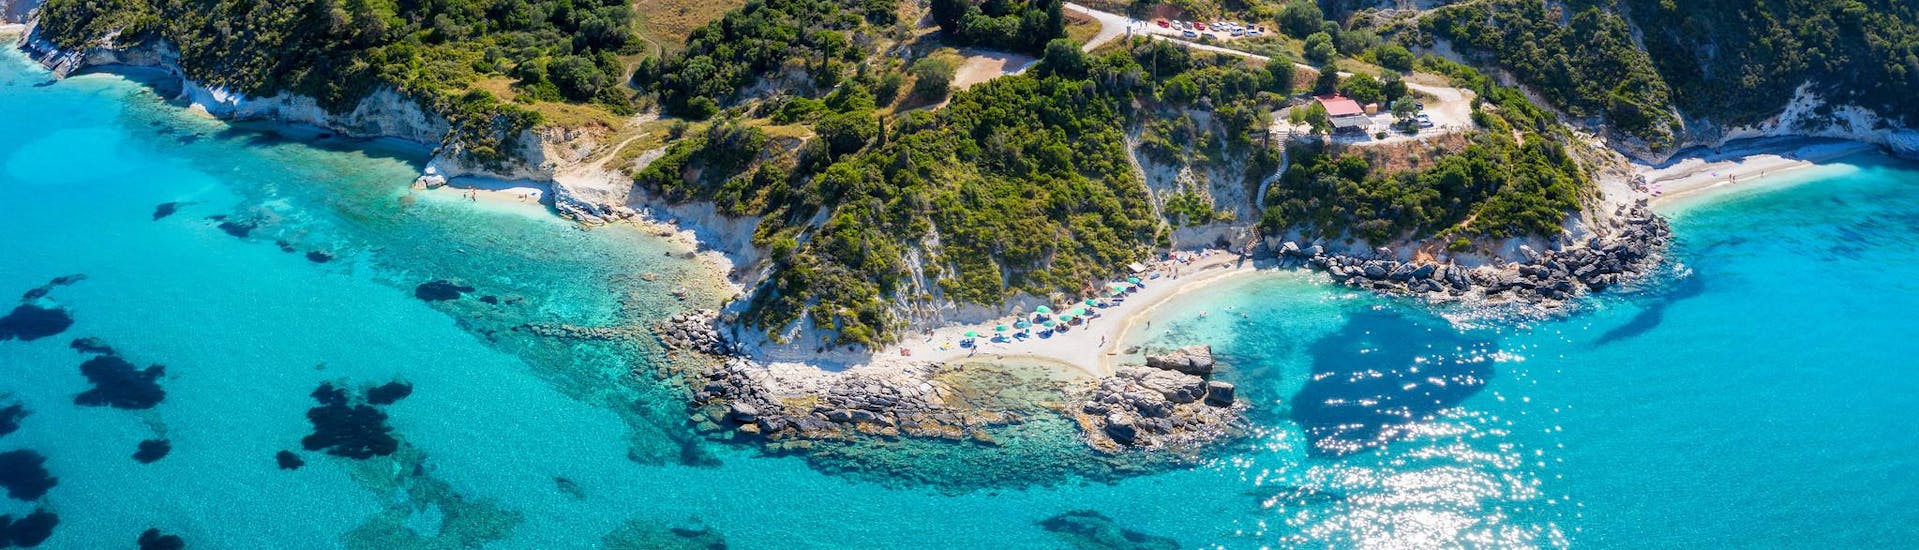 Aerial view of Xigia Beach, a wonderful location for boat trips in Zakynthos.